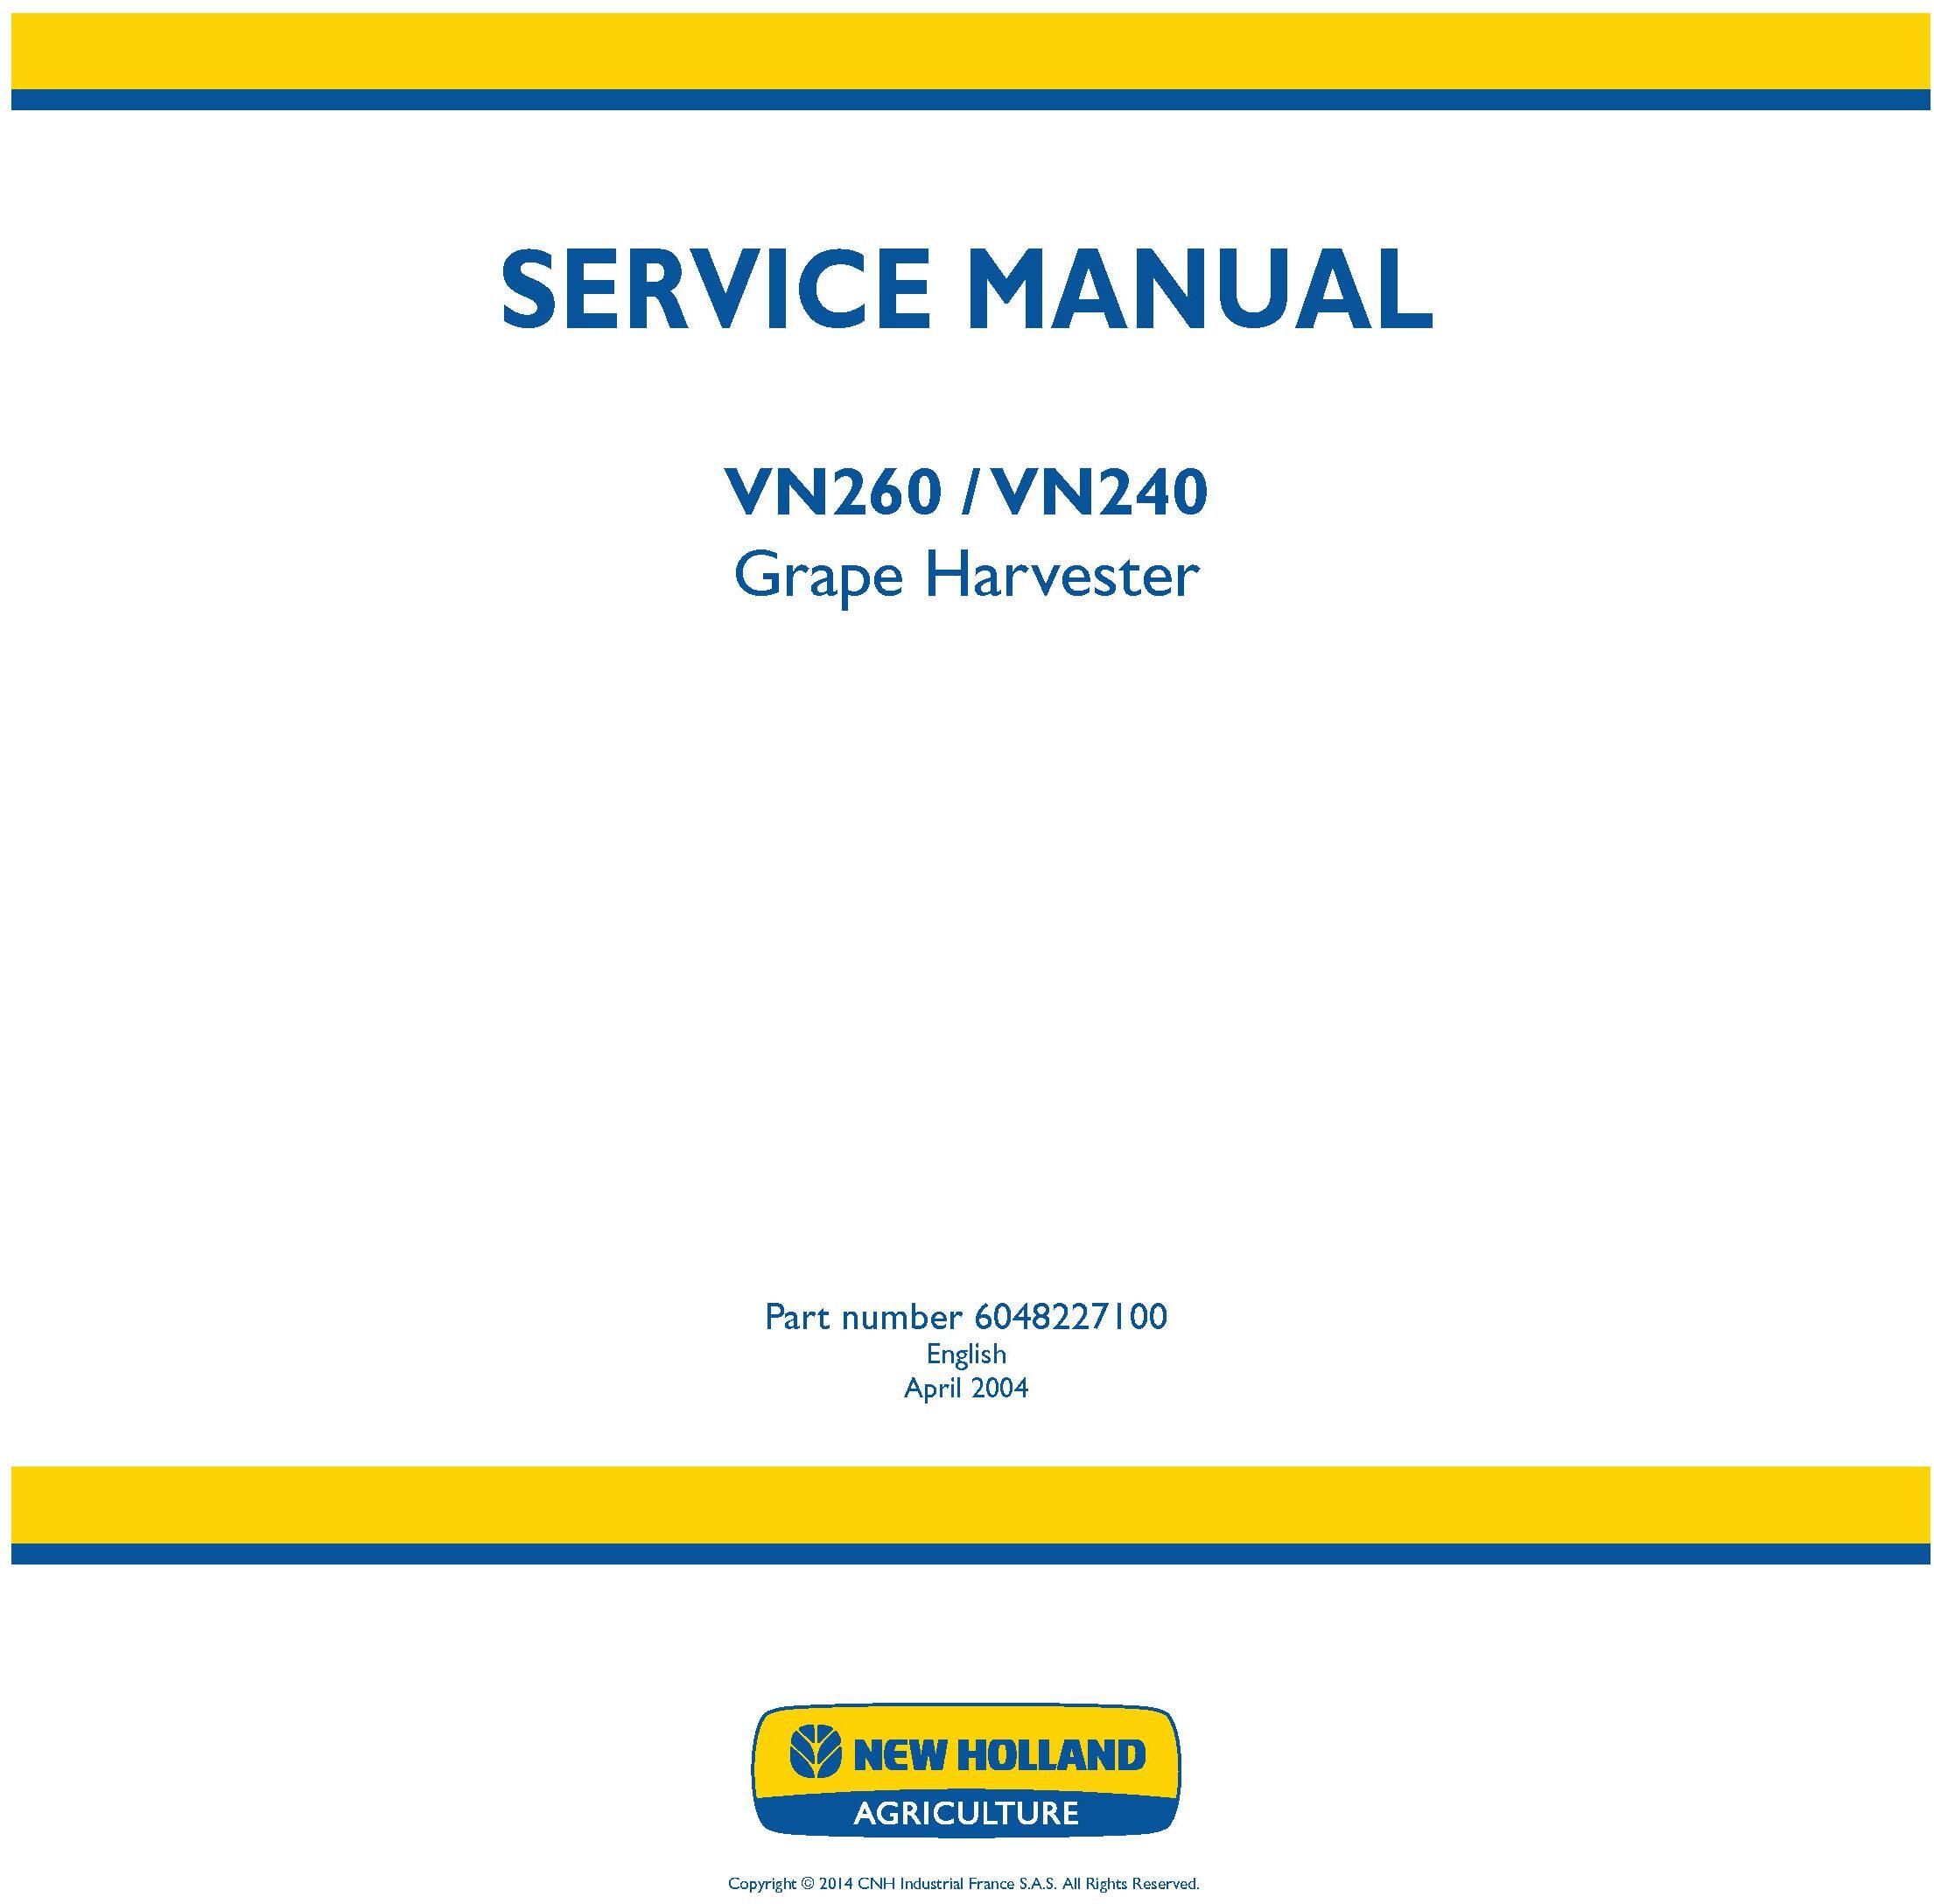 New Holland VN240, VN260 Grape Harvester Service Manual